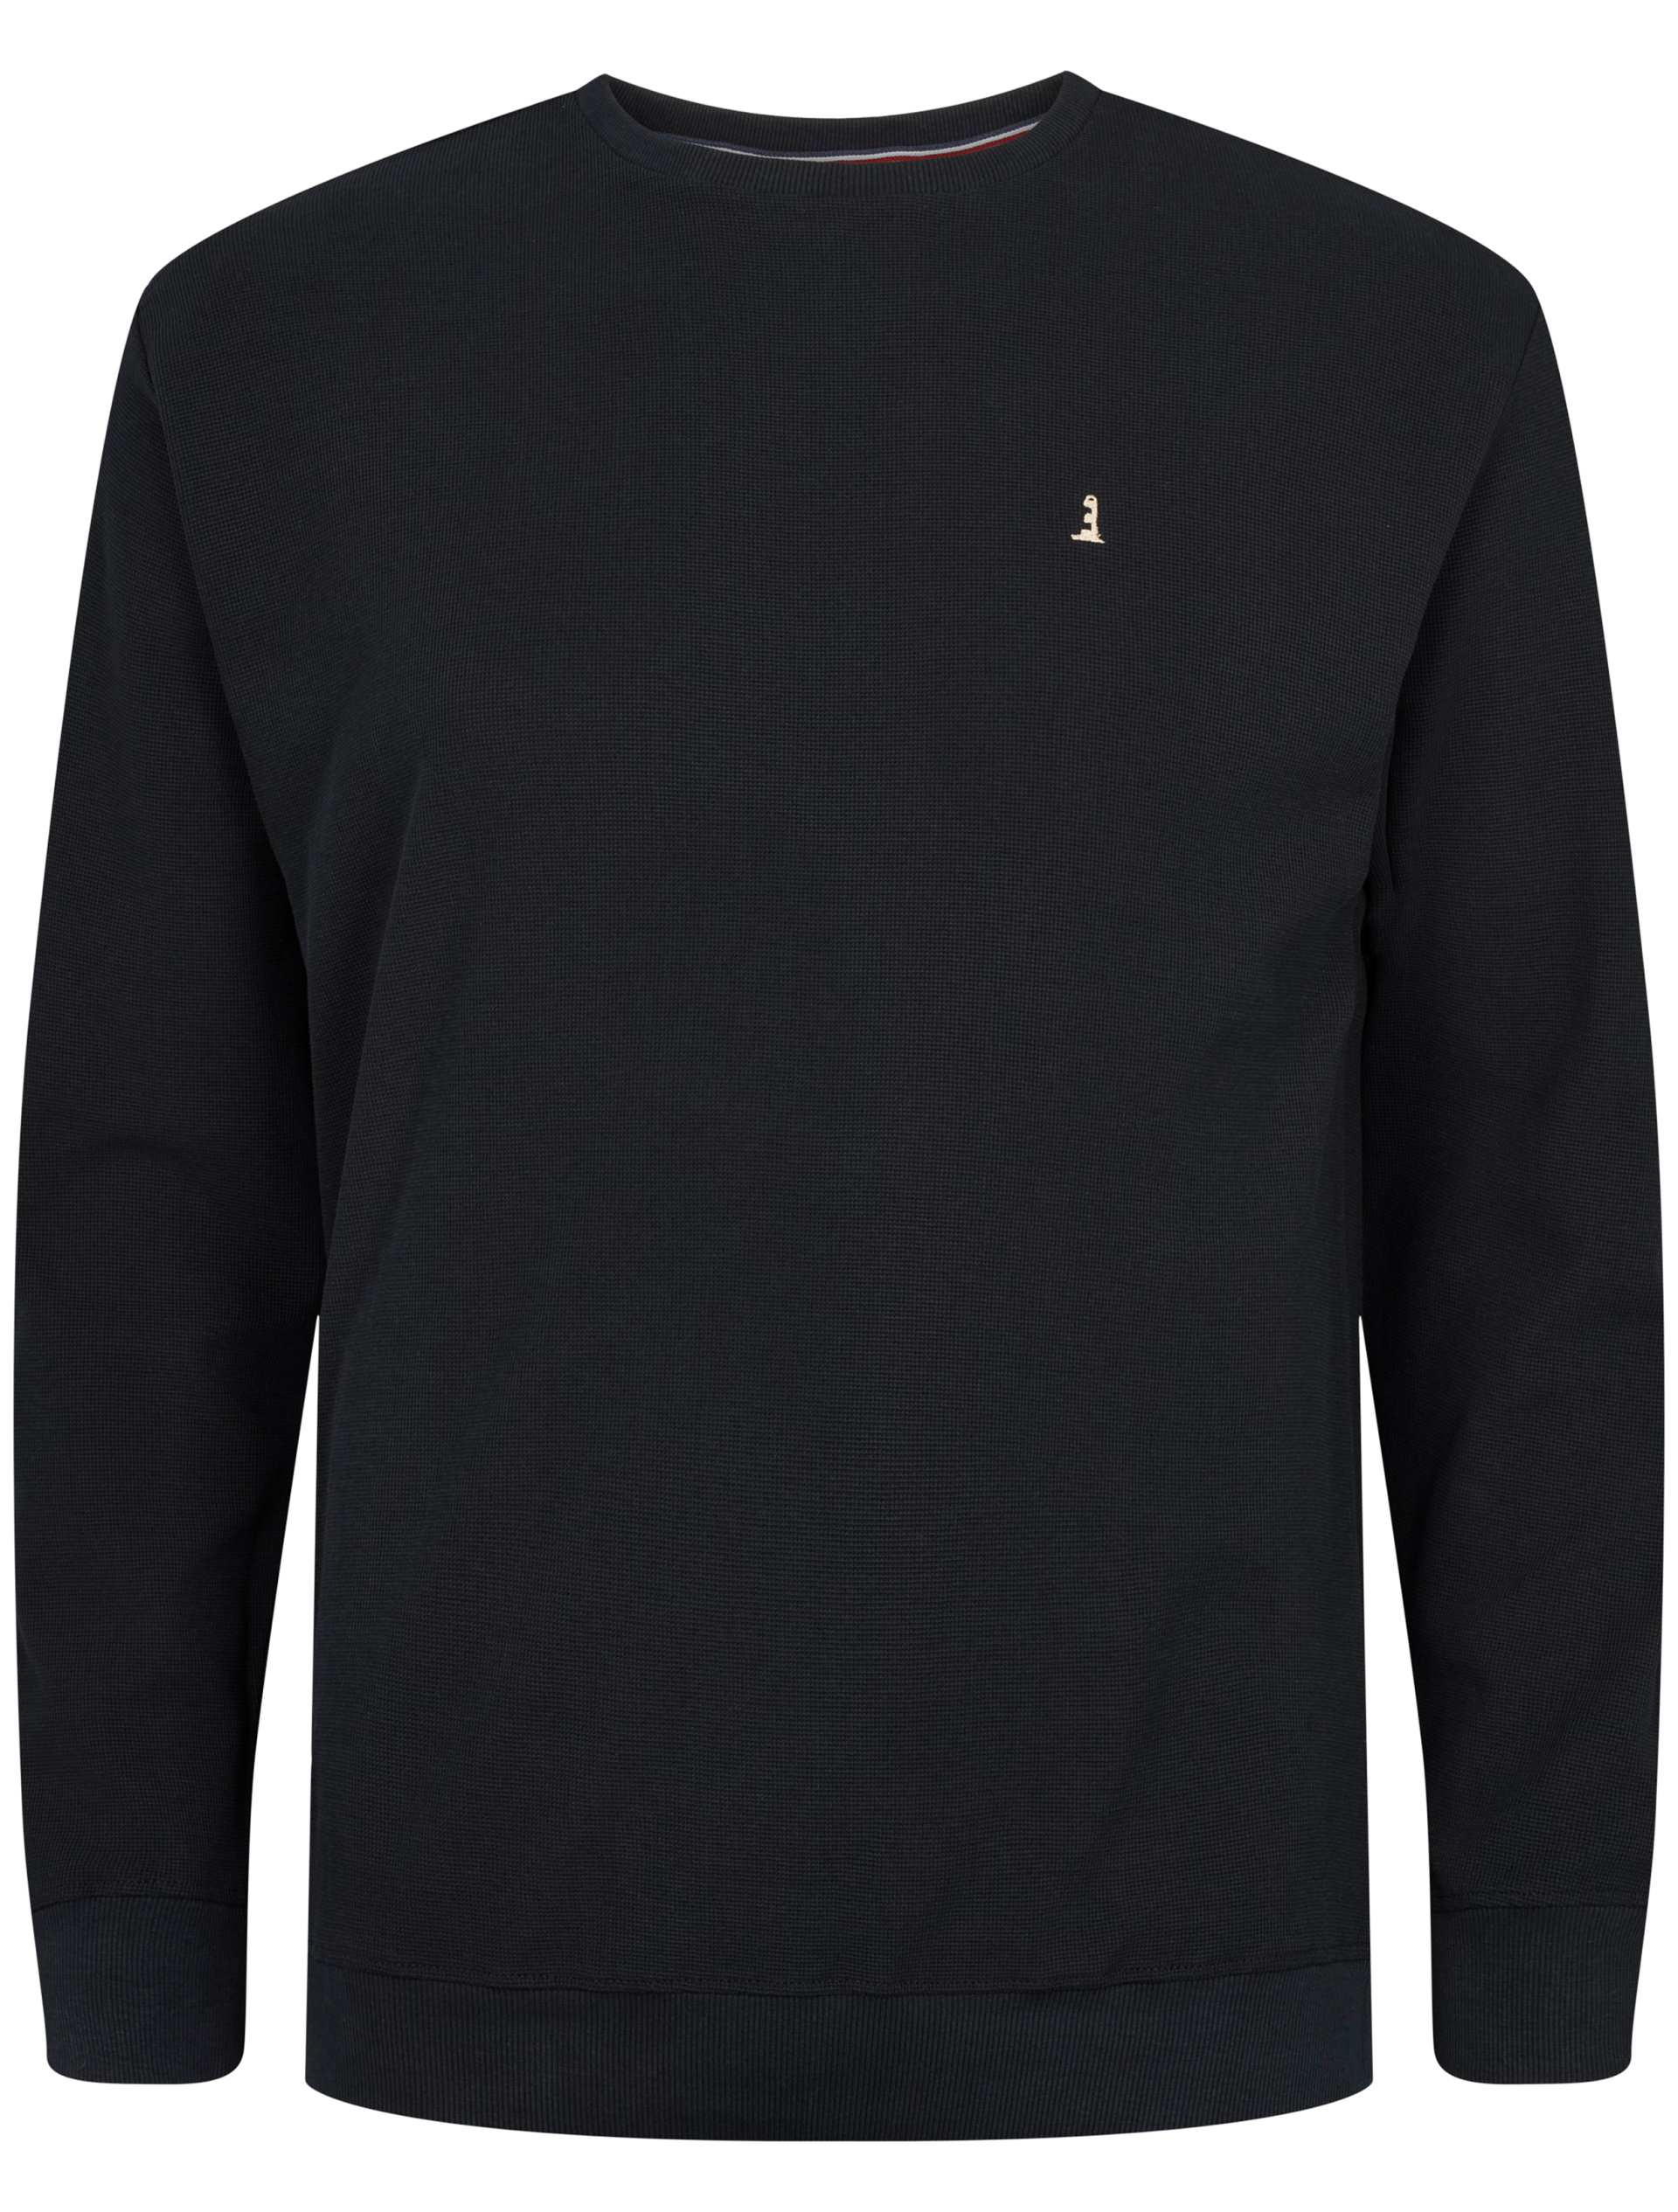 North Sweatshirt sort / 99 black